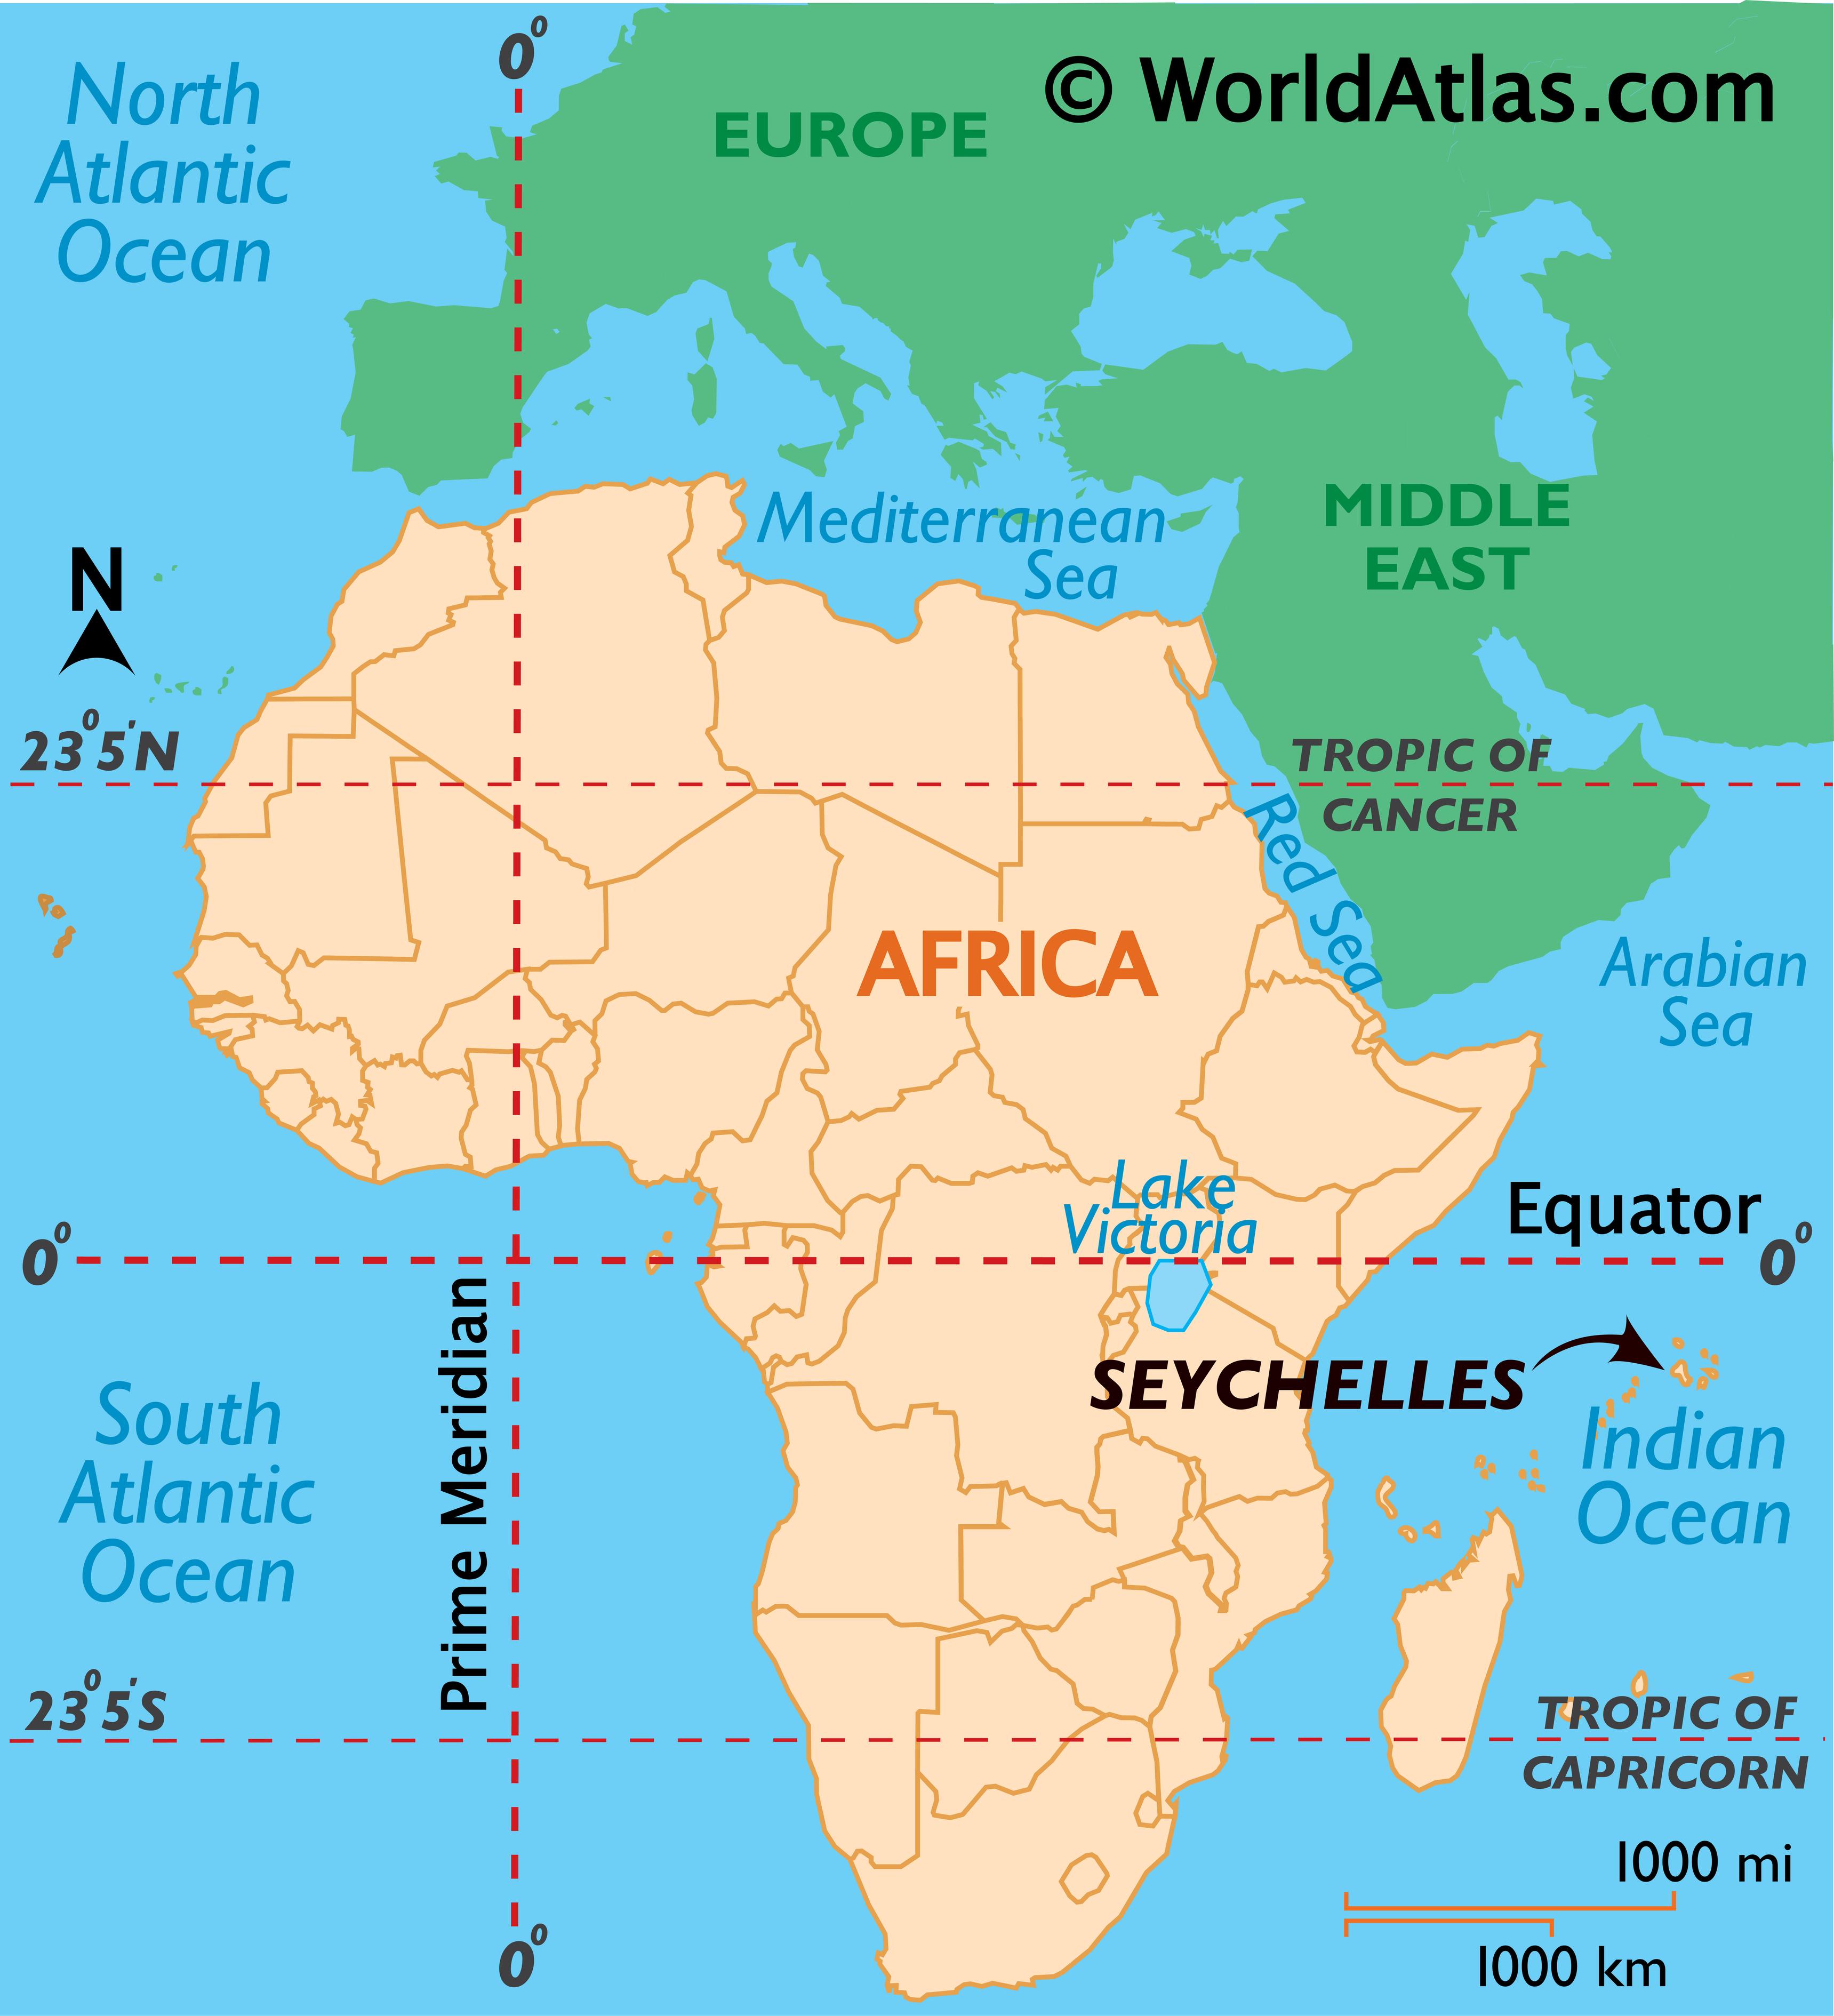 Seychelles On World Map